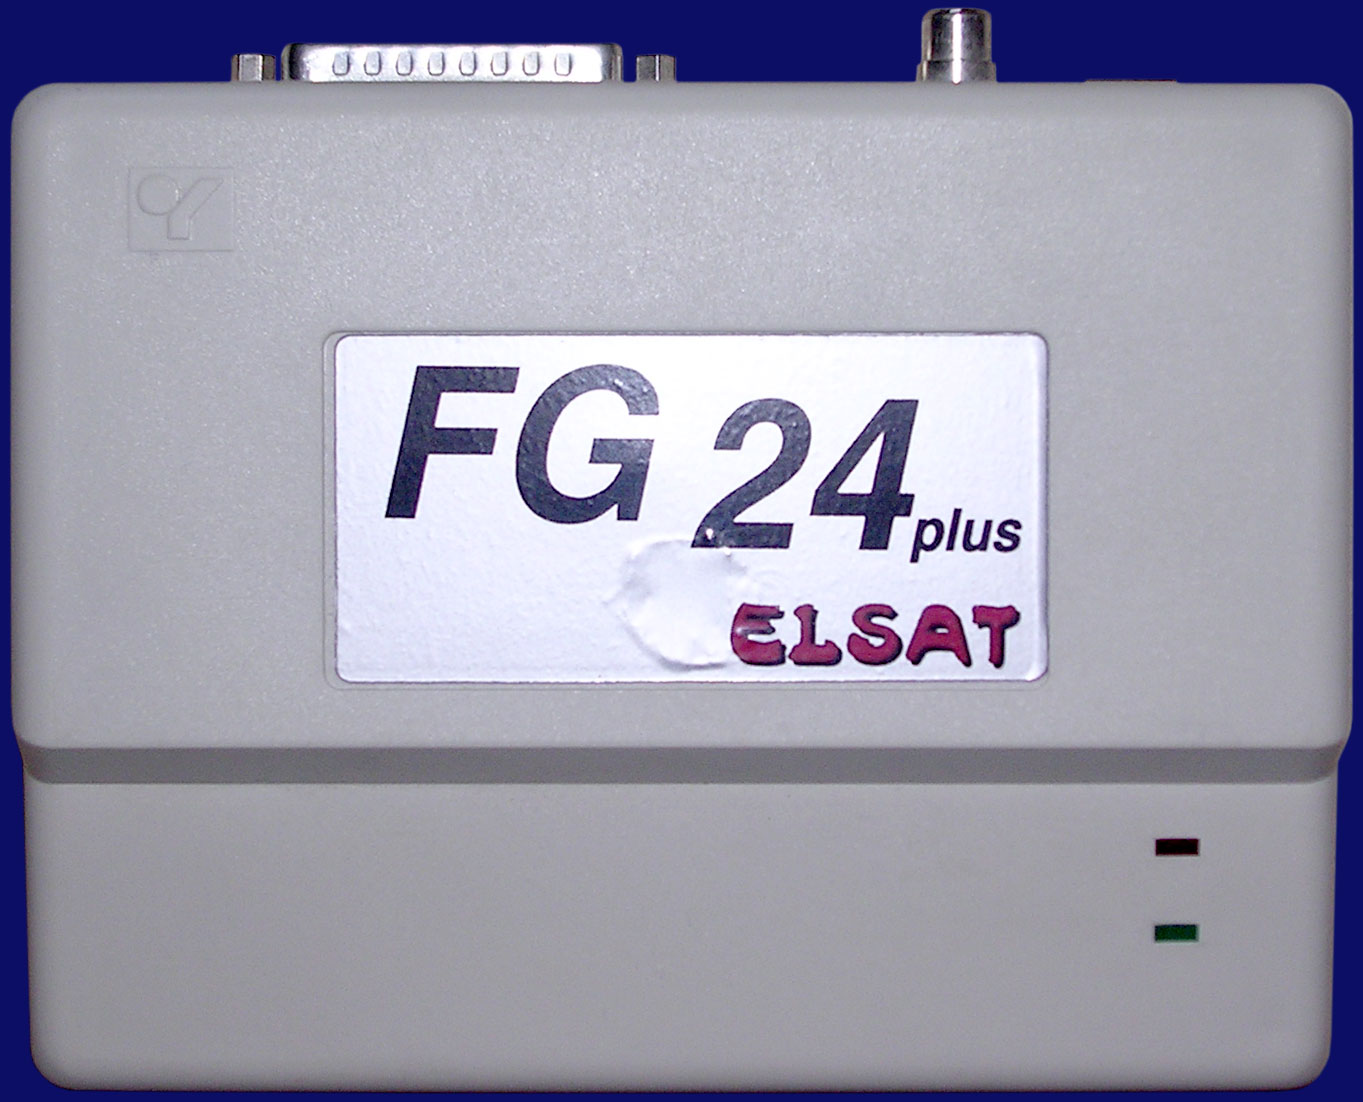 Elsat FG 24 Plus (ProGrab 24RT Plus / Graffito 24) - FG 24 Plus, top side